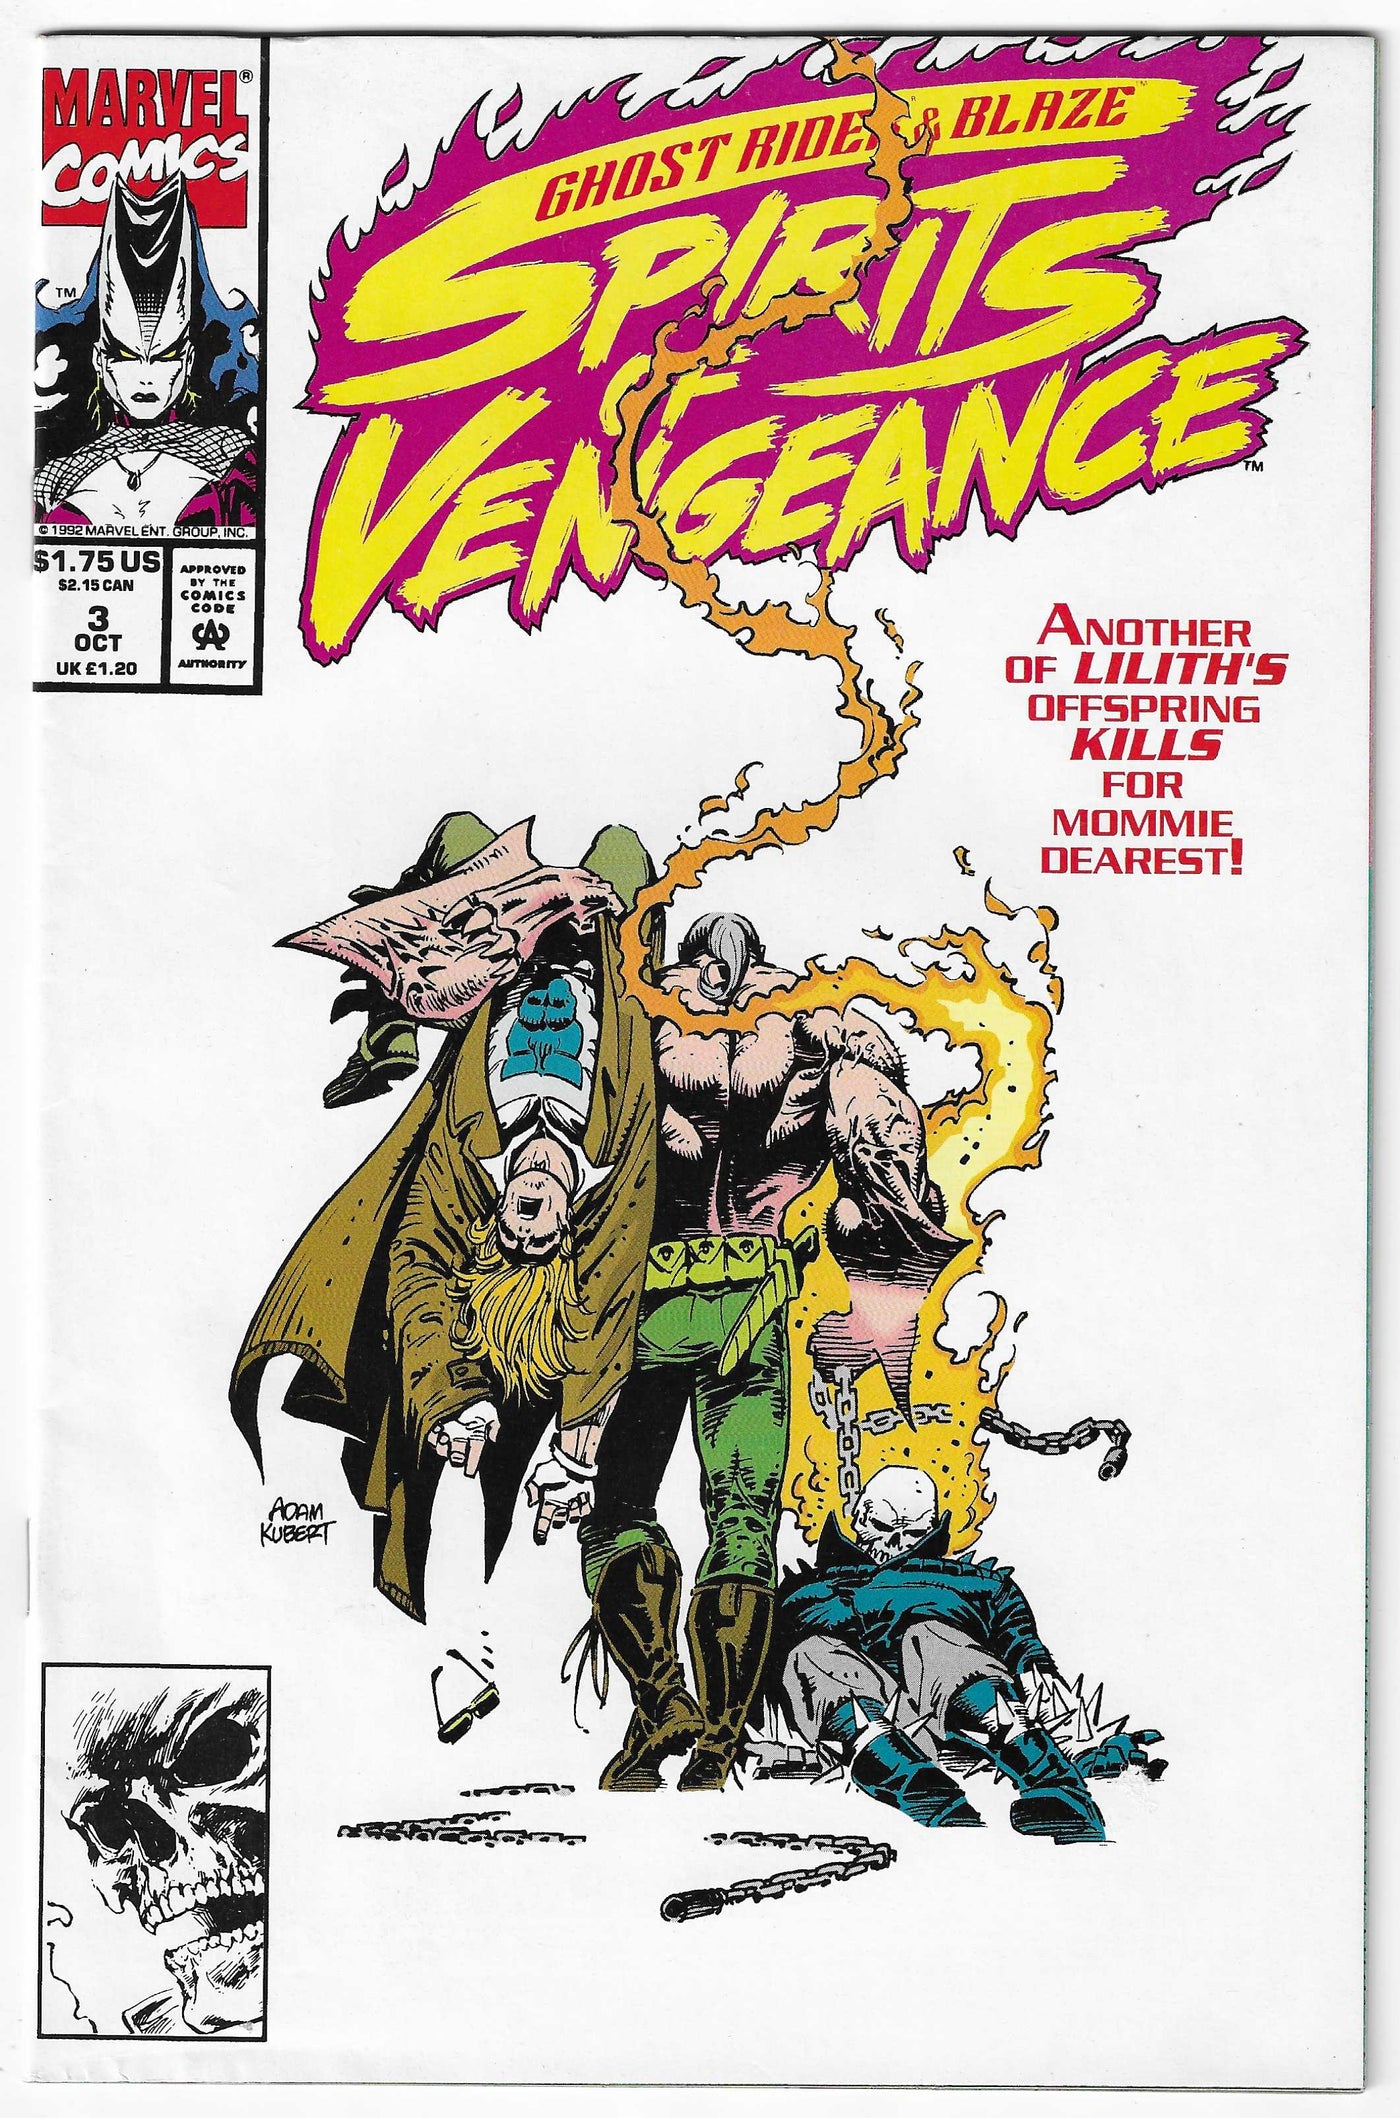 Ghost Rider/Blaze: Spirits of Vengeance (Volume 1) #3